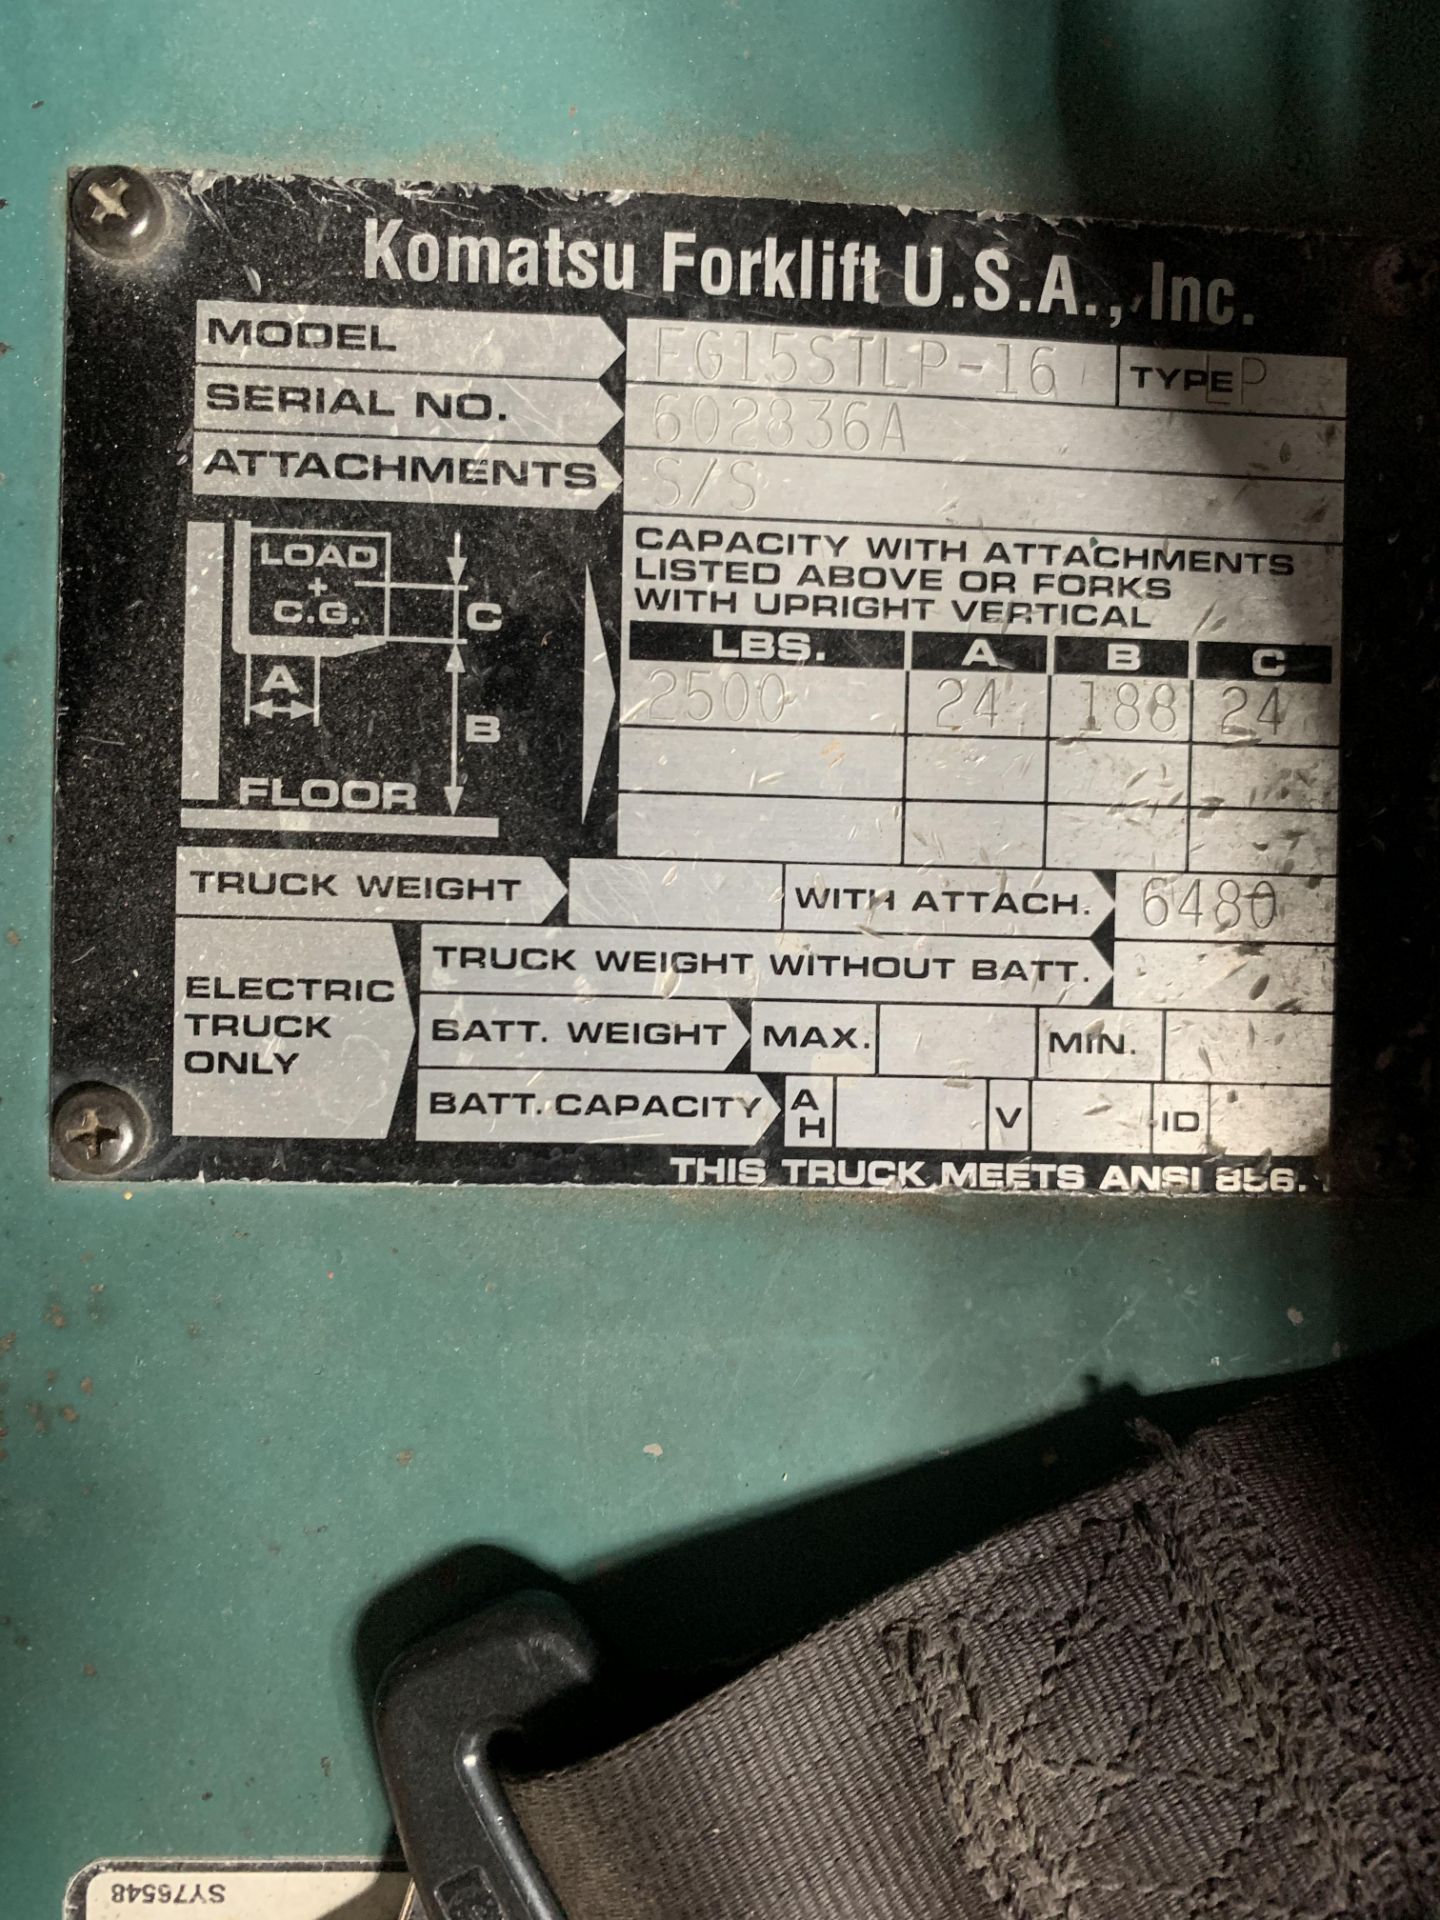 Komatsu Model FG15STLP-16 Forklift, 2500 LB Capacity, LPG (Tank not Included) | Rig Fee: $250 - Image 2 of 2